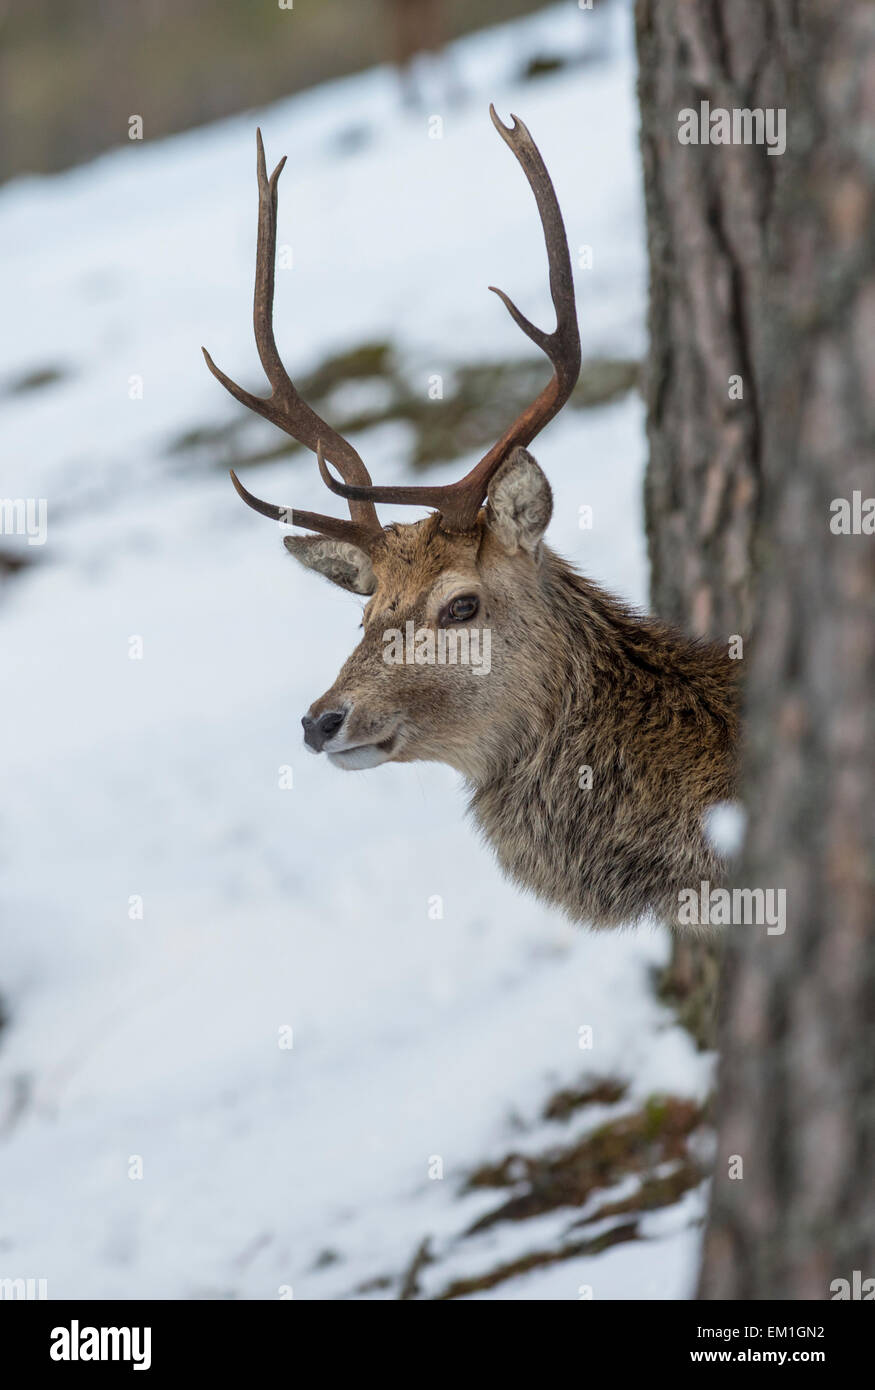 Red deer (Cervus elaphus). Stag peering from behind a tree on the Alvie estate in Scotland in winter. Stock Photo